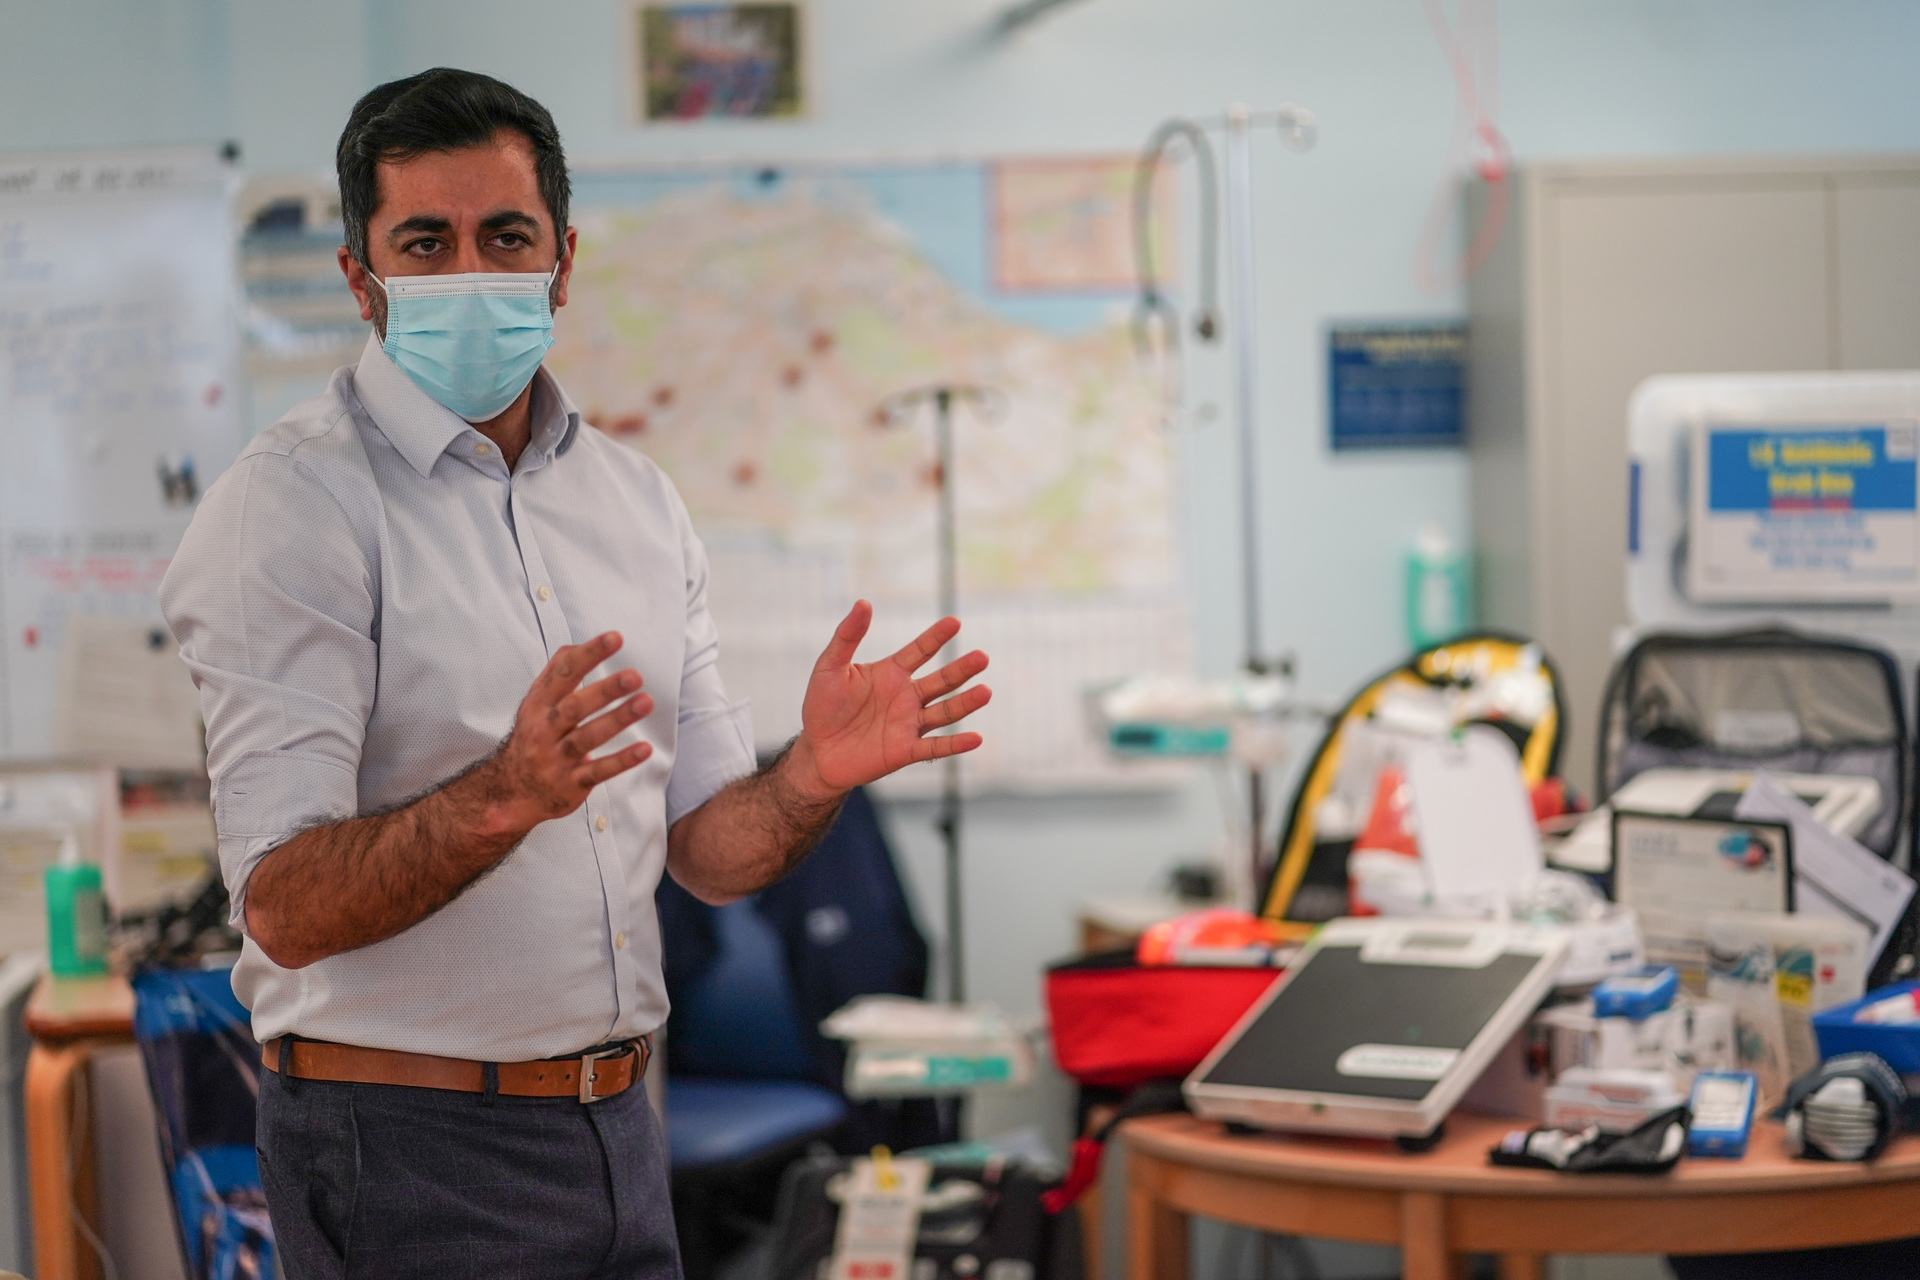 Scottish health secretary Humza Yousaf is seen during a visit at Liberton Hospital on January 11, 2022 in Edinburgh.